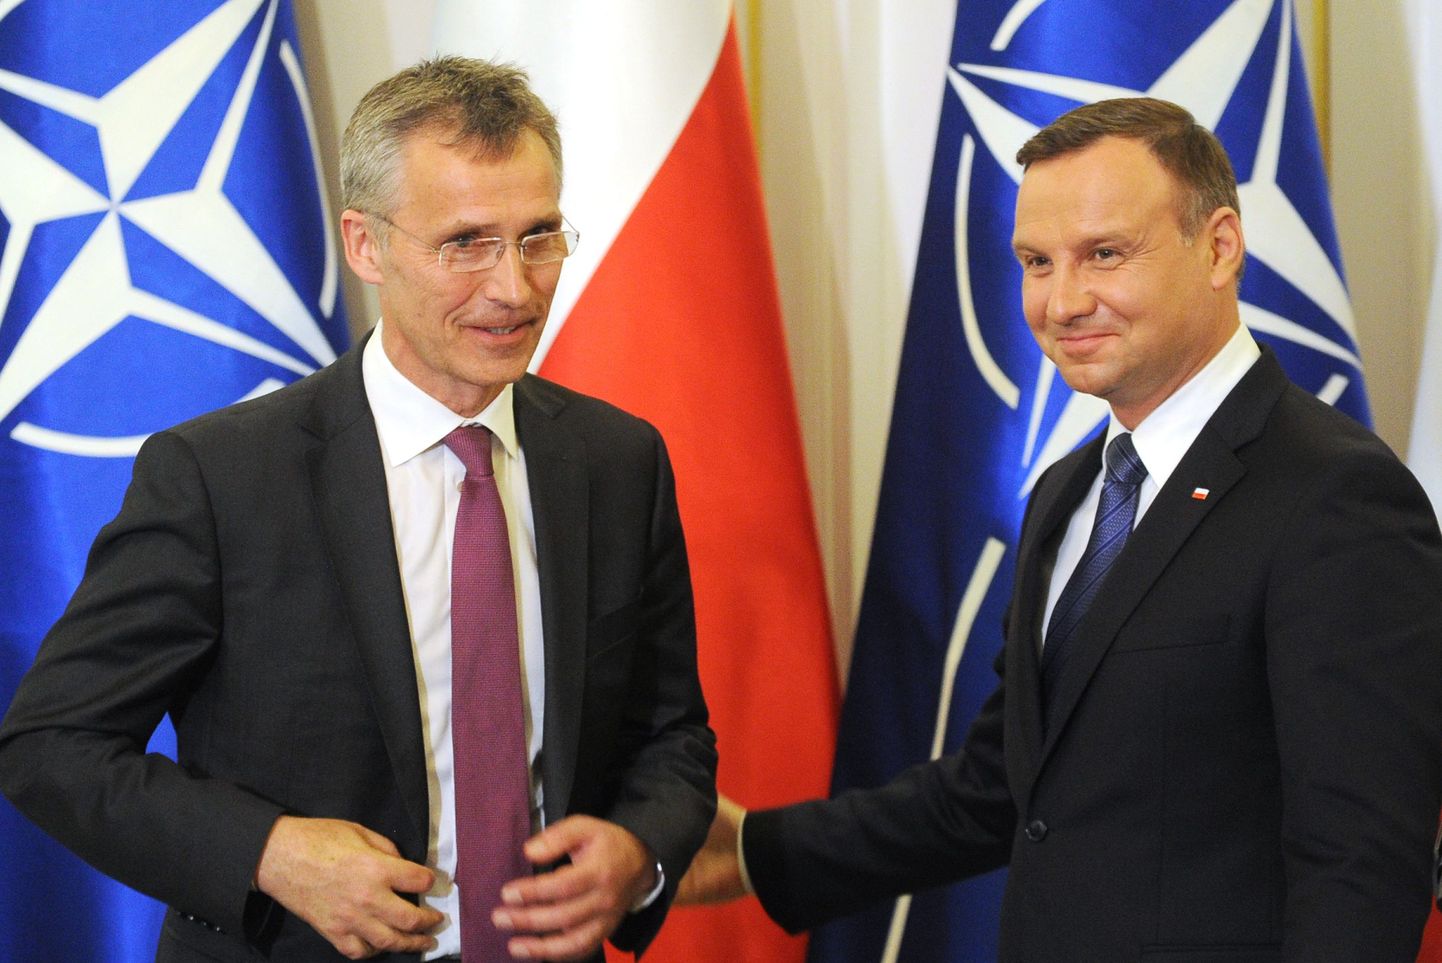 NATO peasekretär Jens Stoltenberg Poolas president Andrzej Dudaga